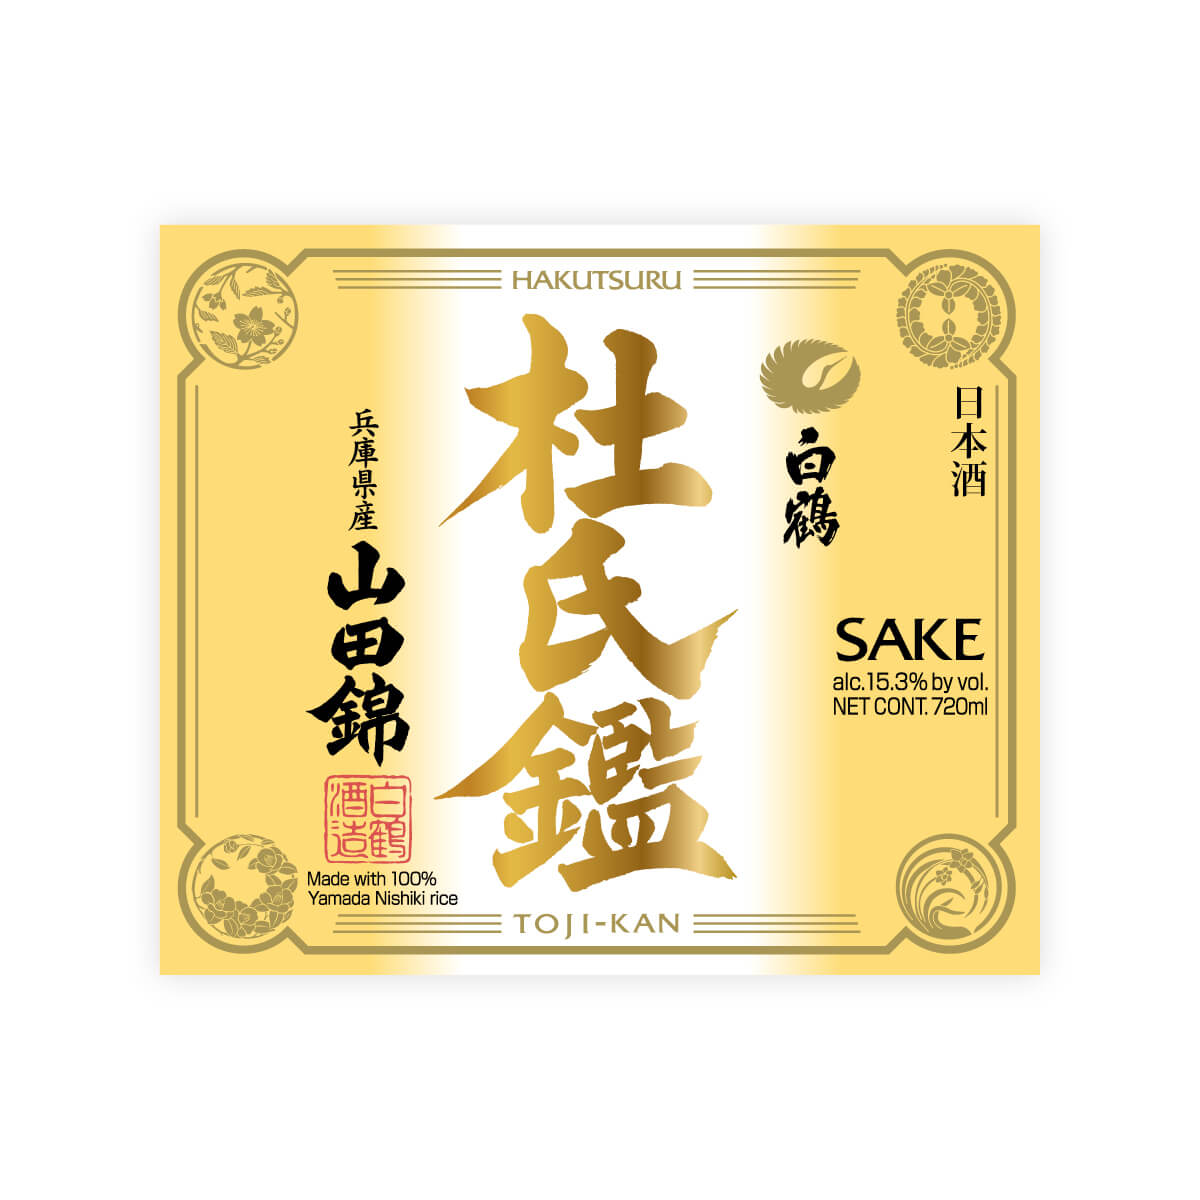 Hakutsuru “Brewer’s Pride” front label